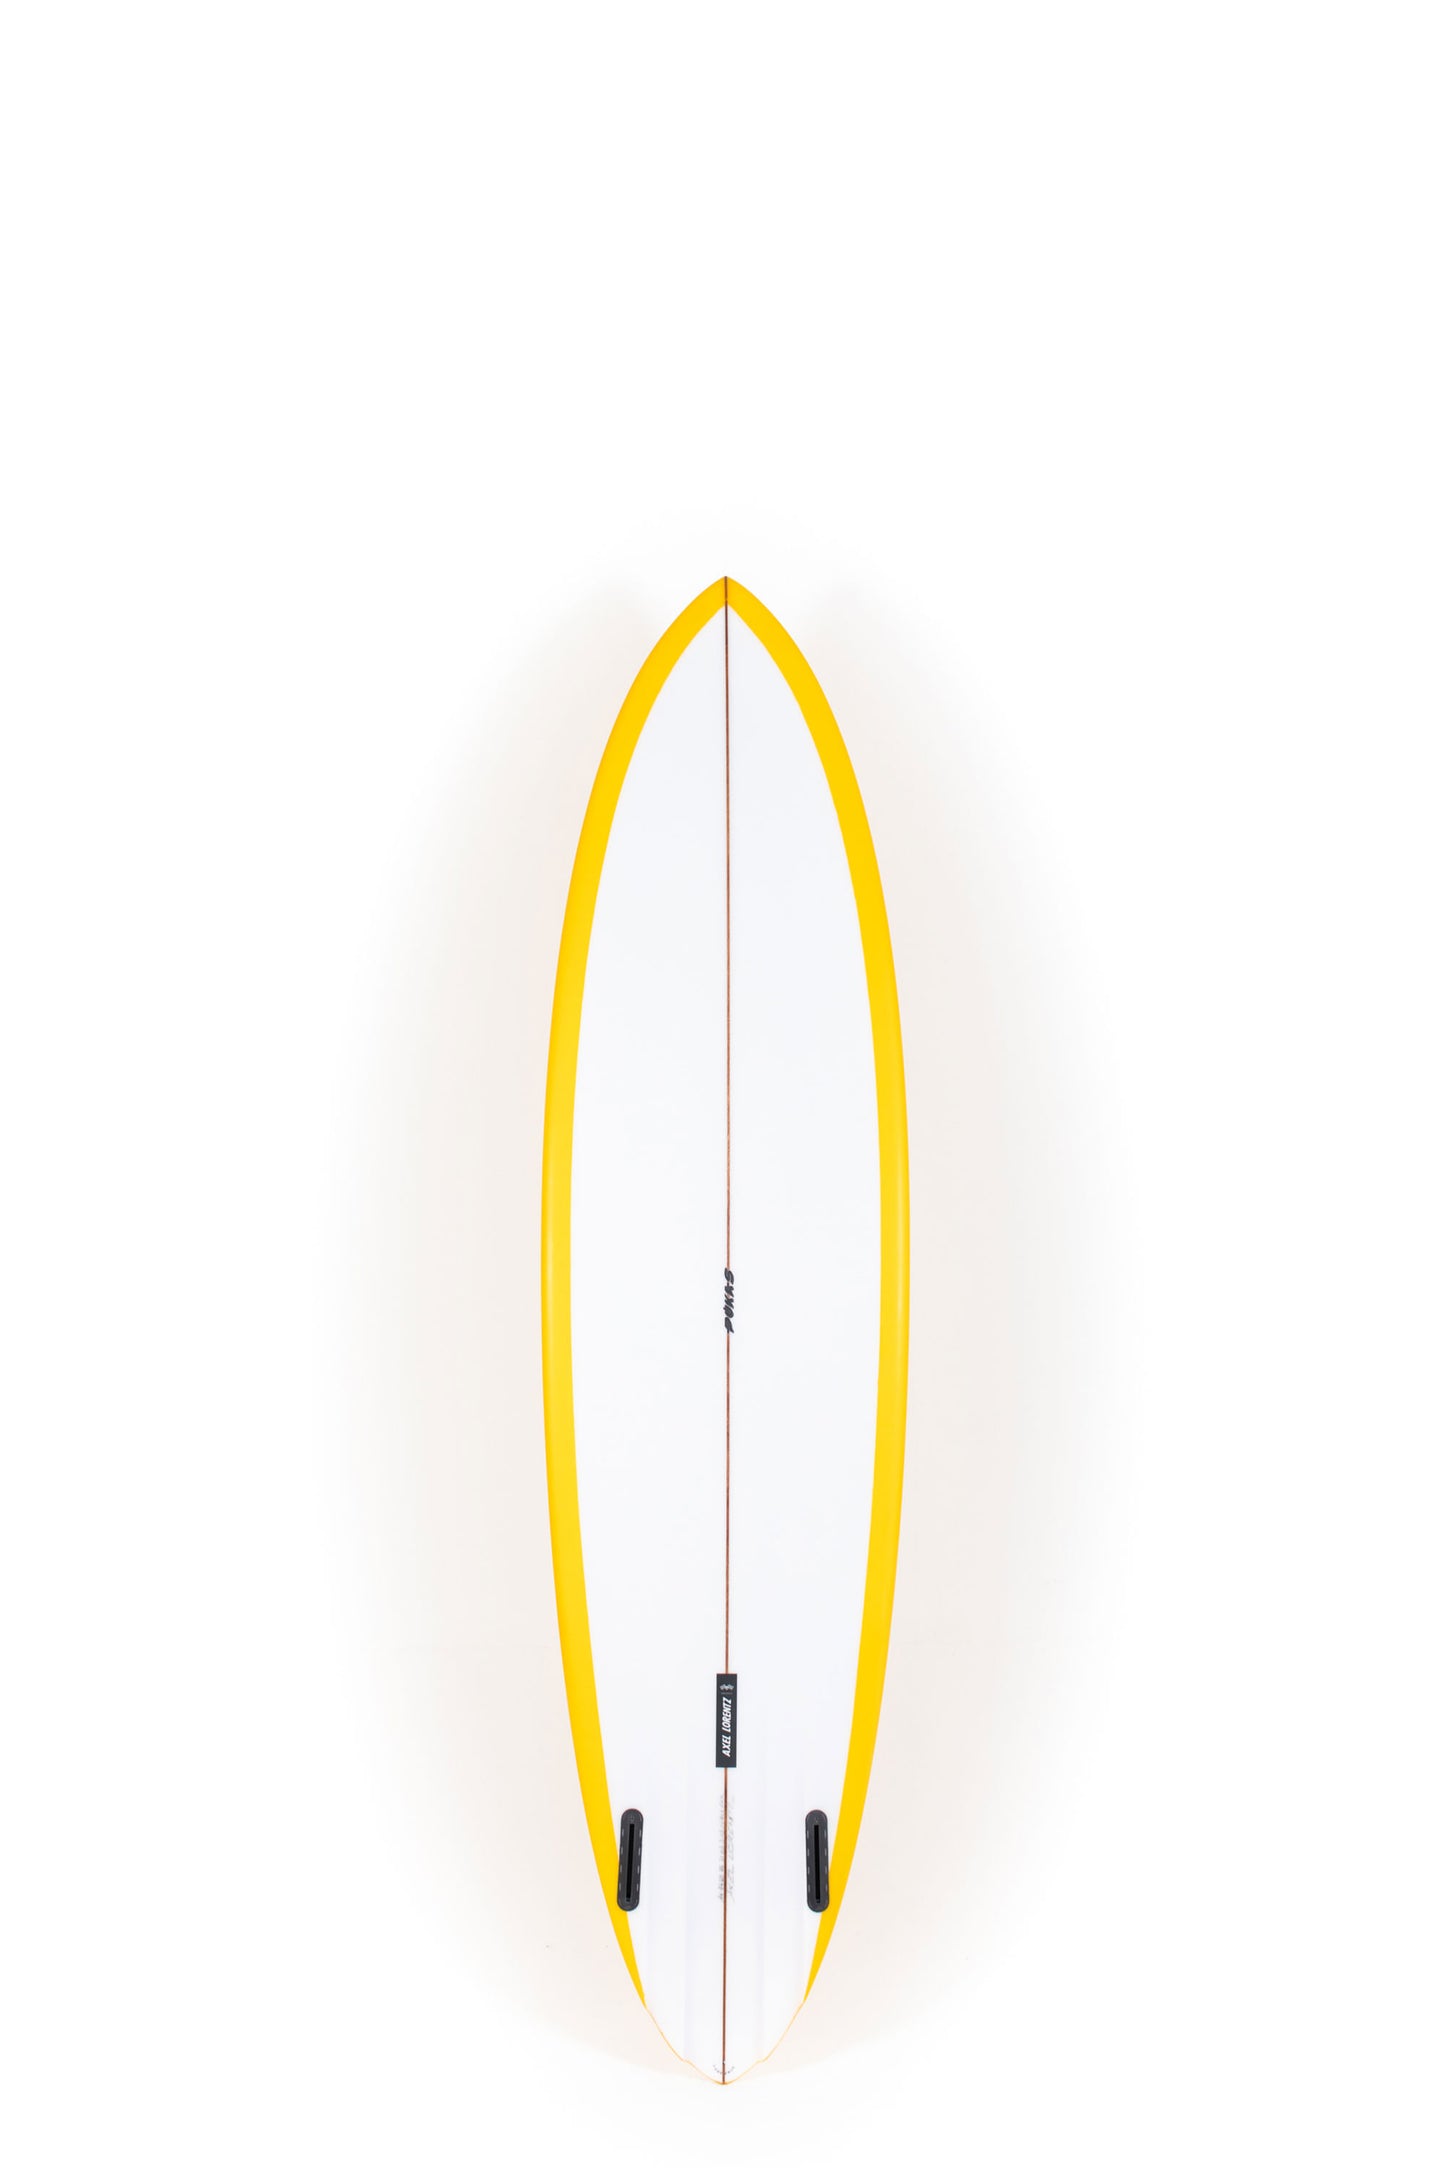 Pukas Surf Shop - Pukas Surfboard - LADY TWIN by Axel Lorentz - 7’6” x 21,63 x 3,03 - 51,76L - AX07428